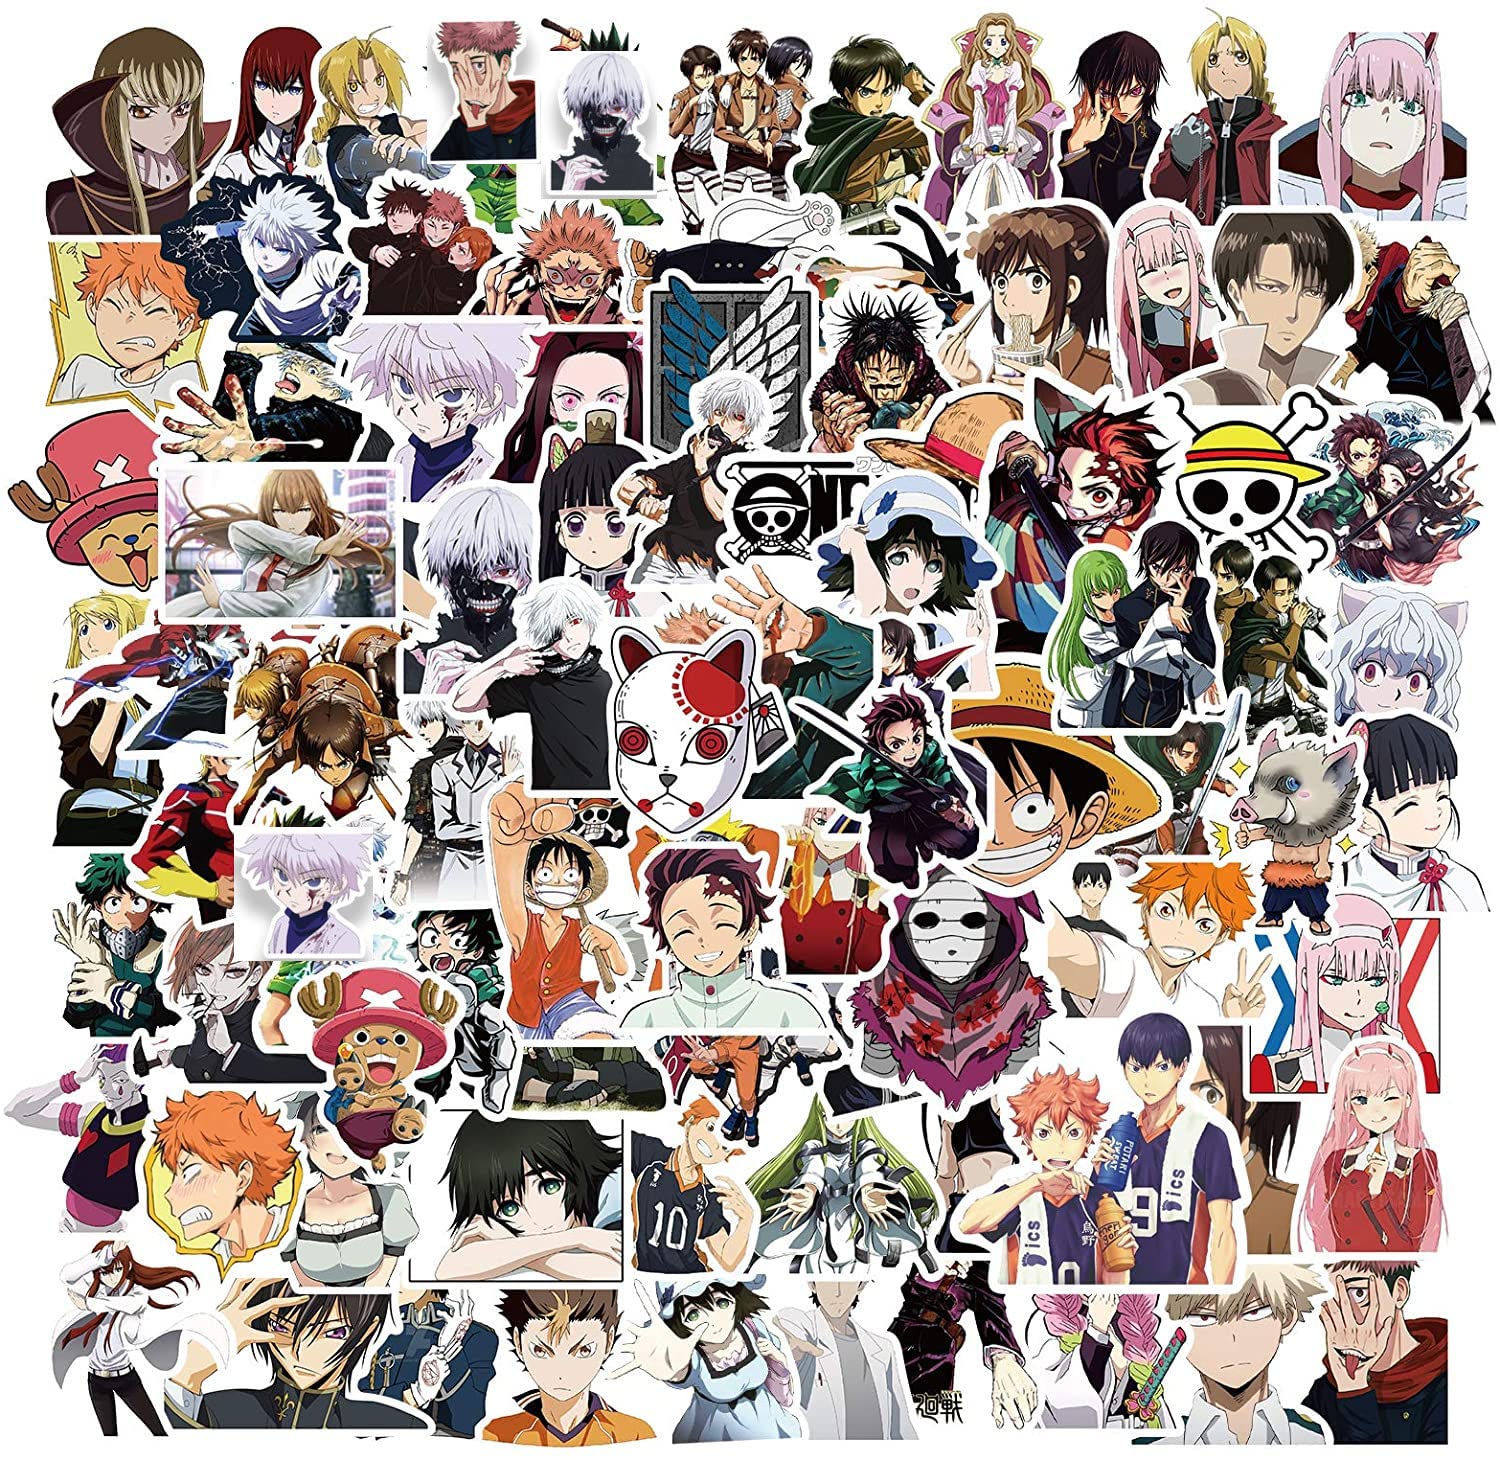 Anime Stickers v5.6 MOD APK (Premium Unlocked) Download